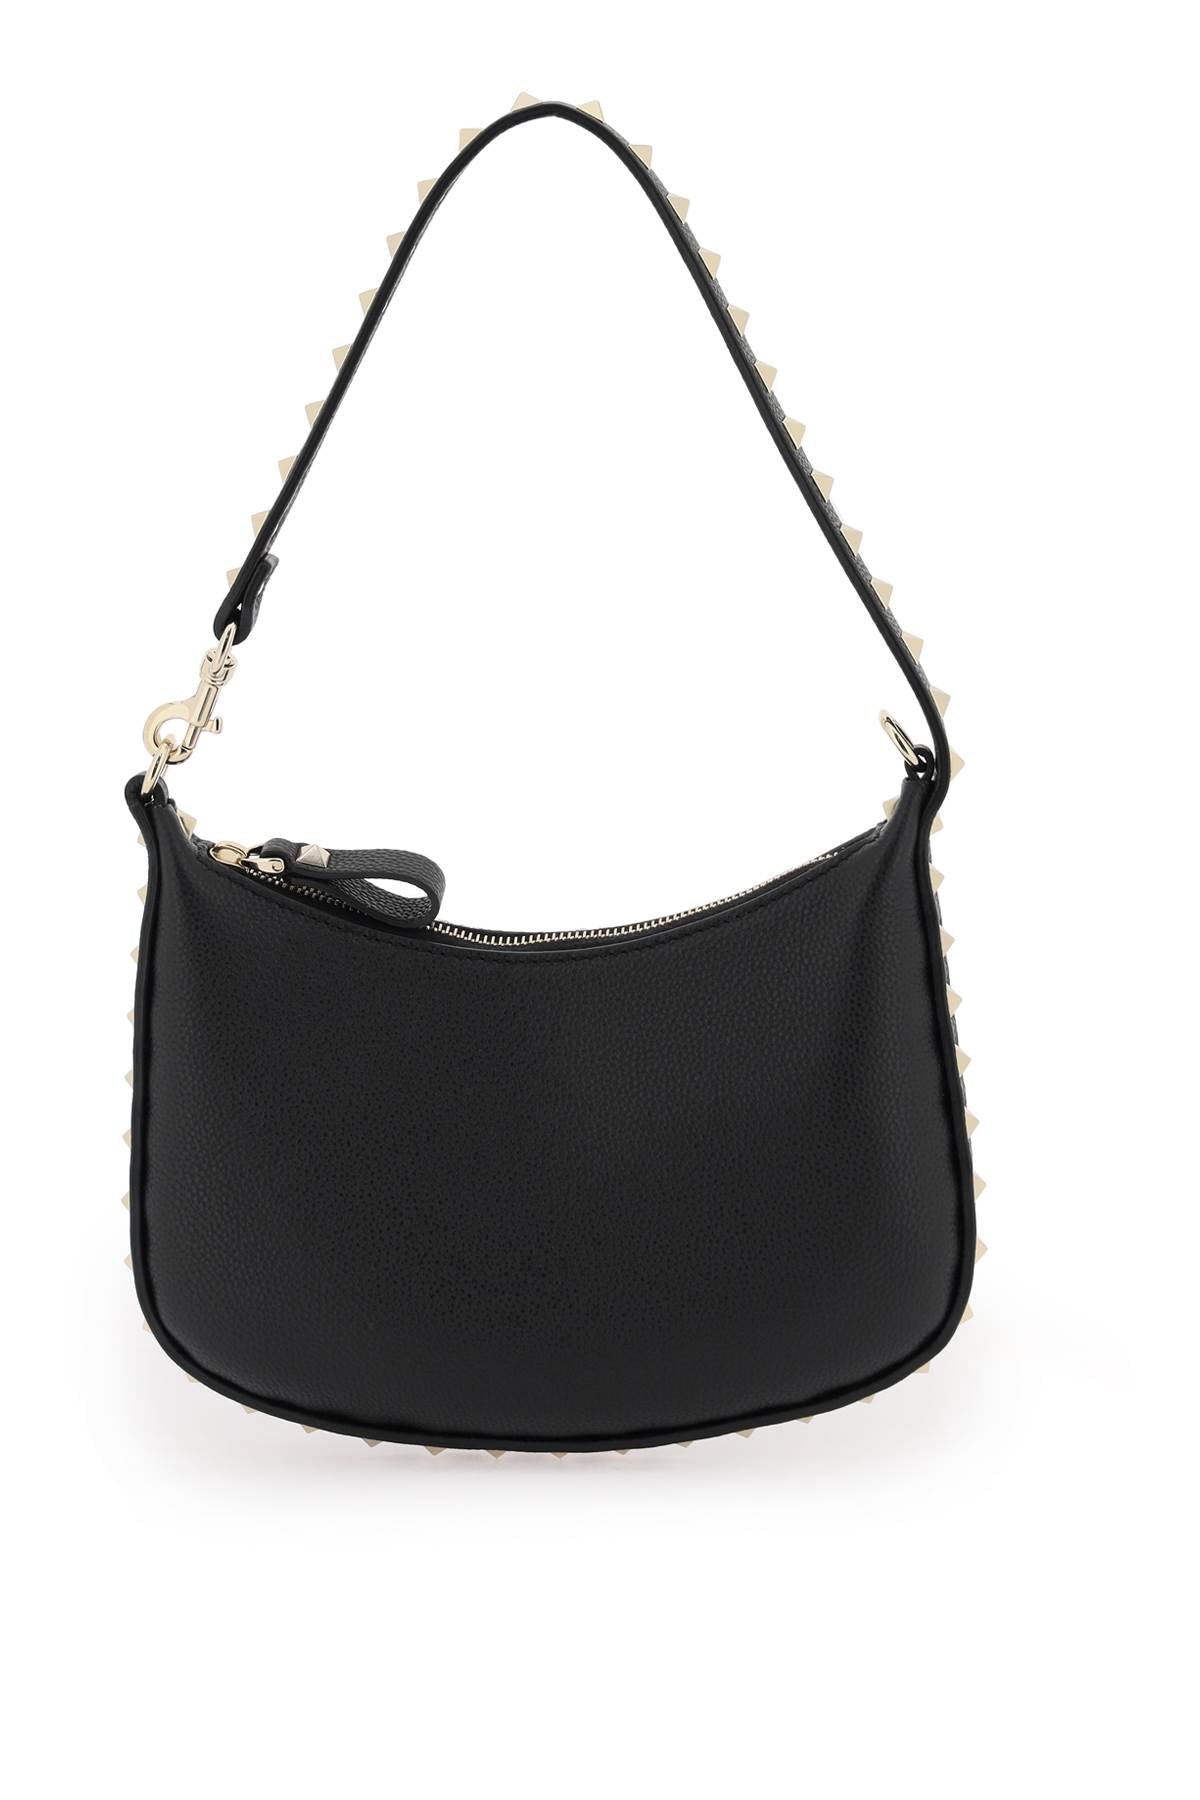 Stylish Black Leather Mini Hobo Handbag for Women